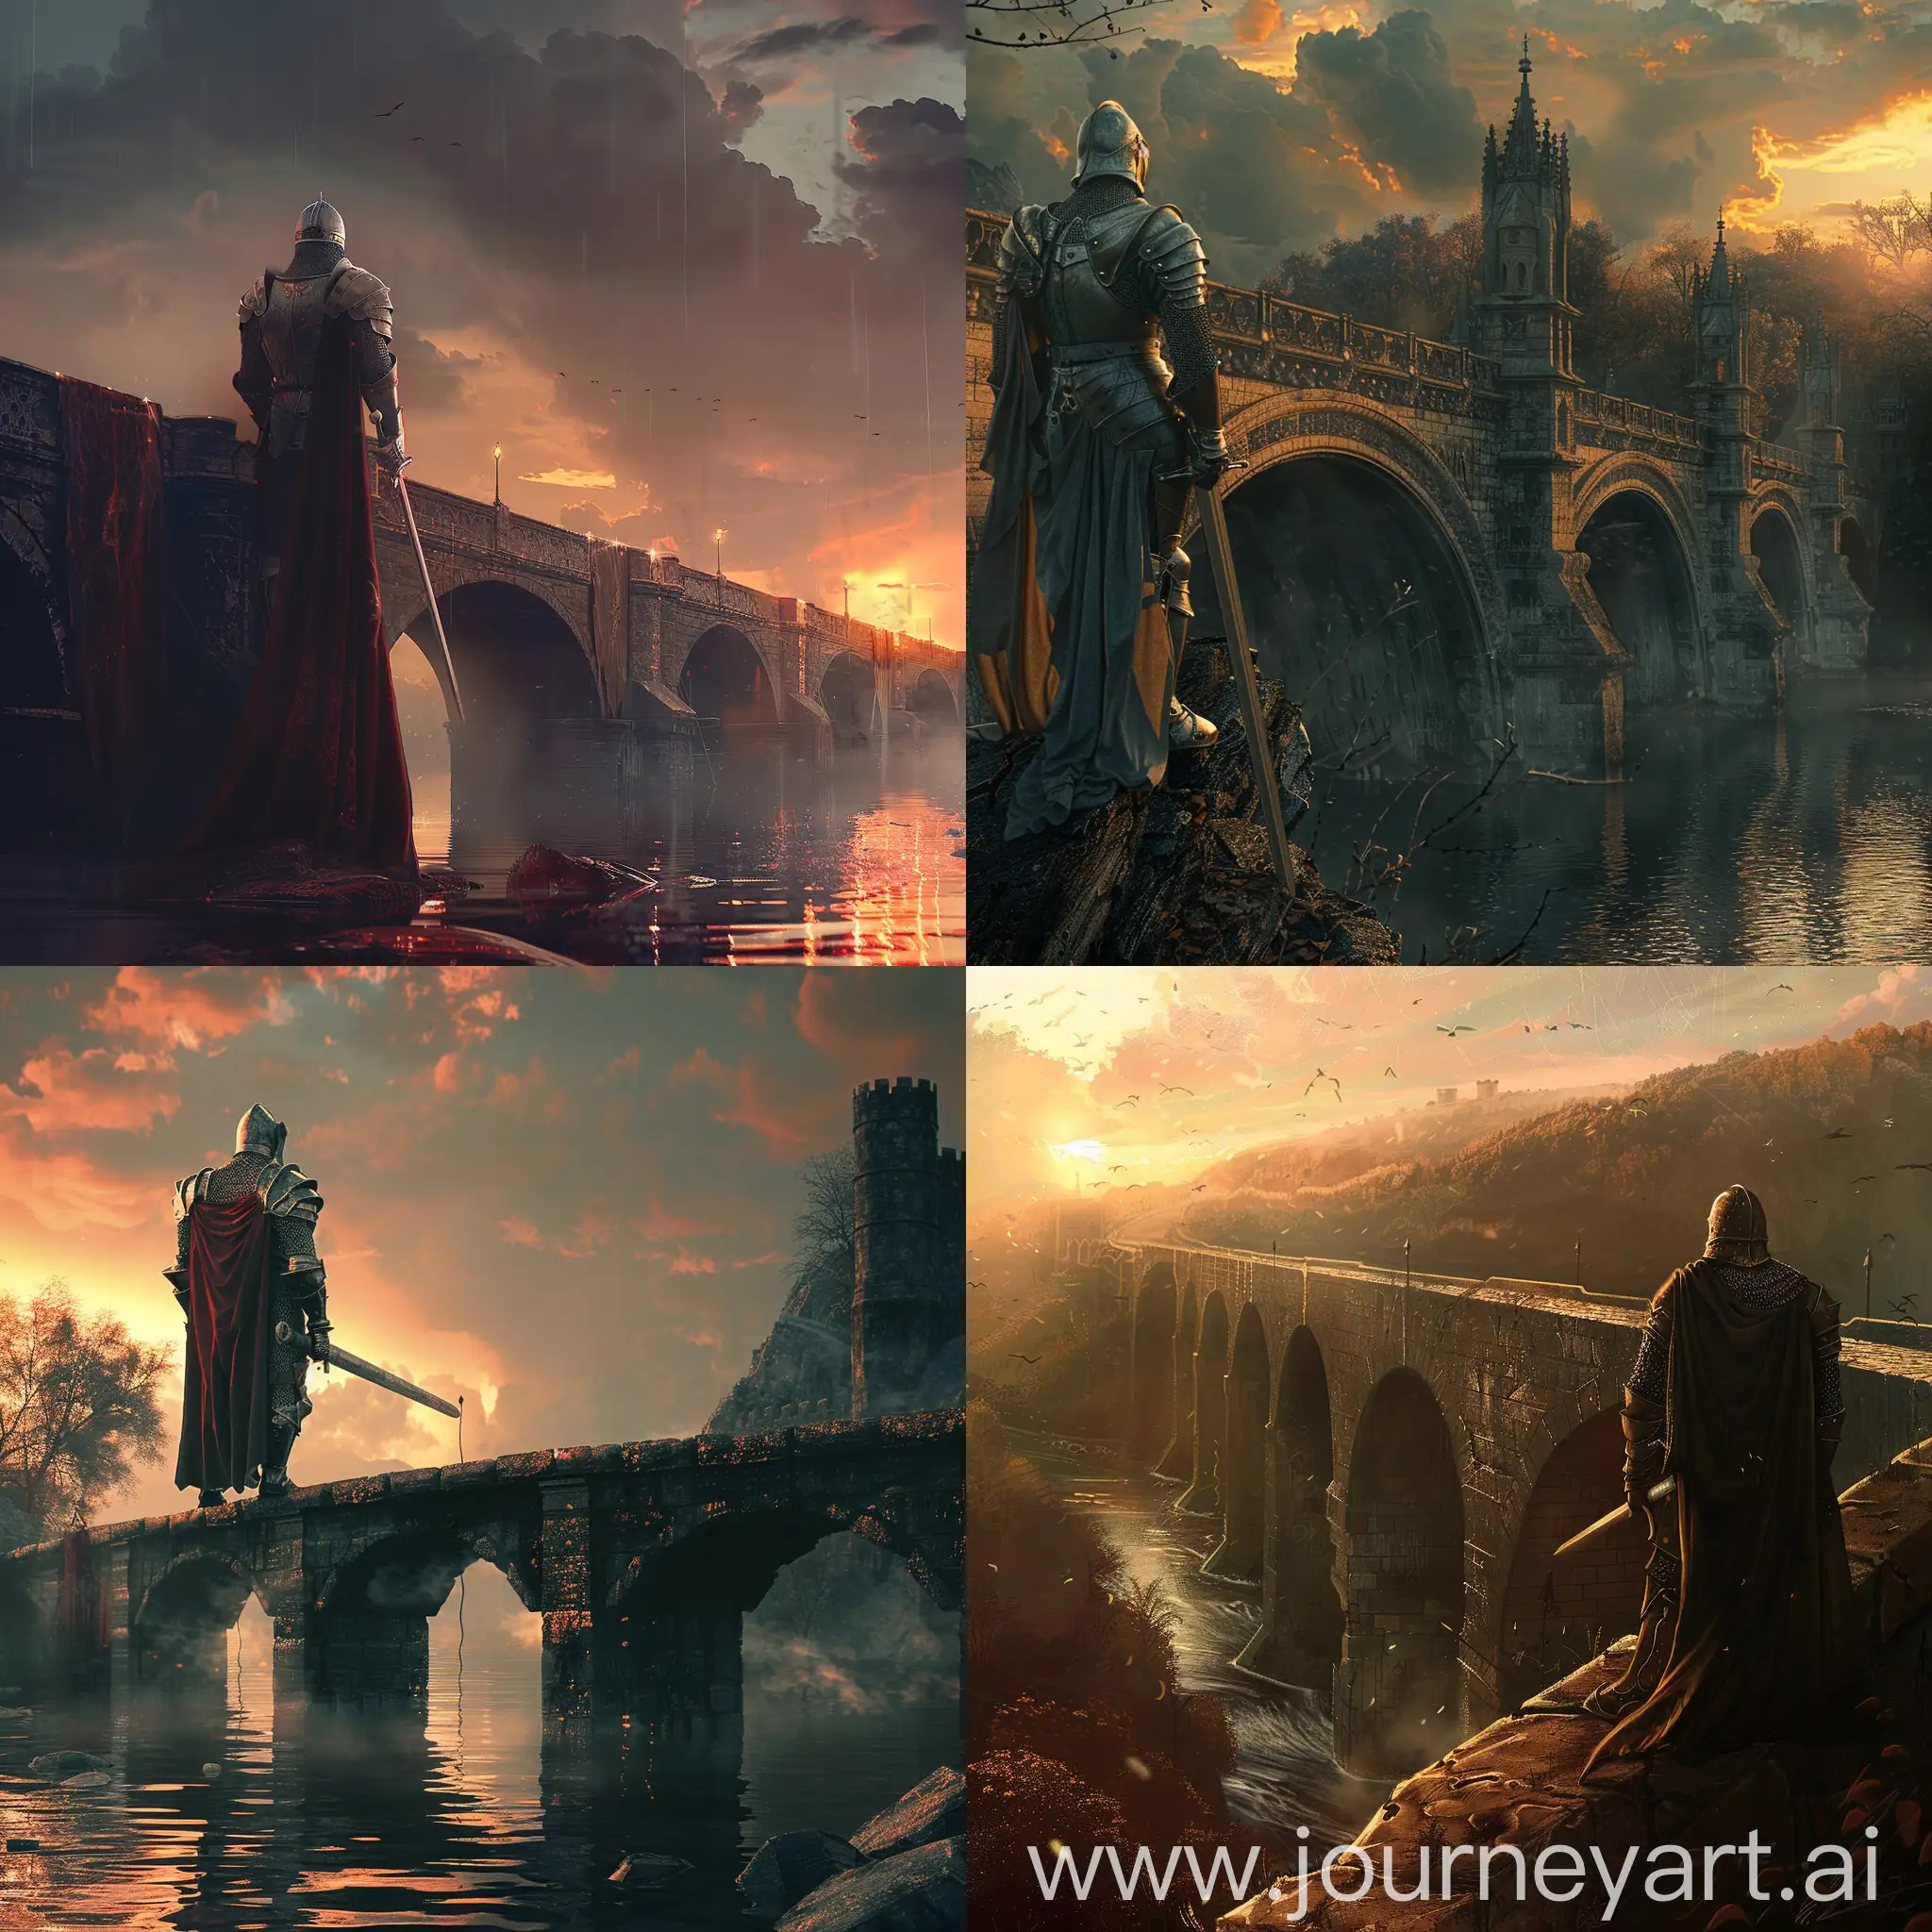 A knight guarding an old bridge, calm, hd, warm lighting